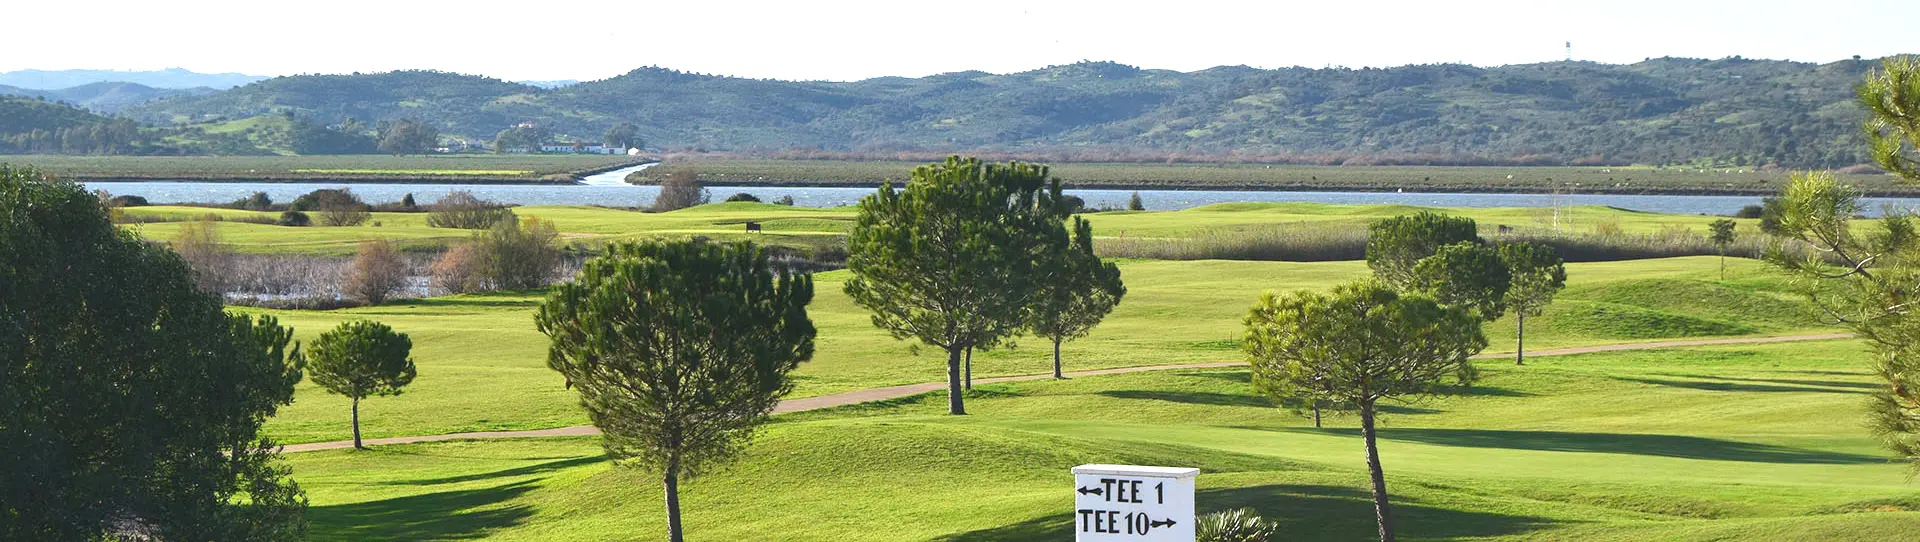 Spain golf courses - Isla Canela Links  - Photo 2